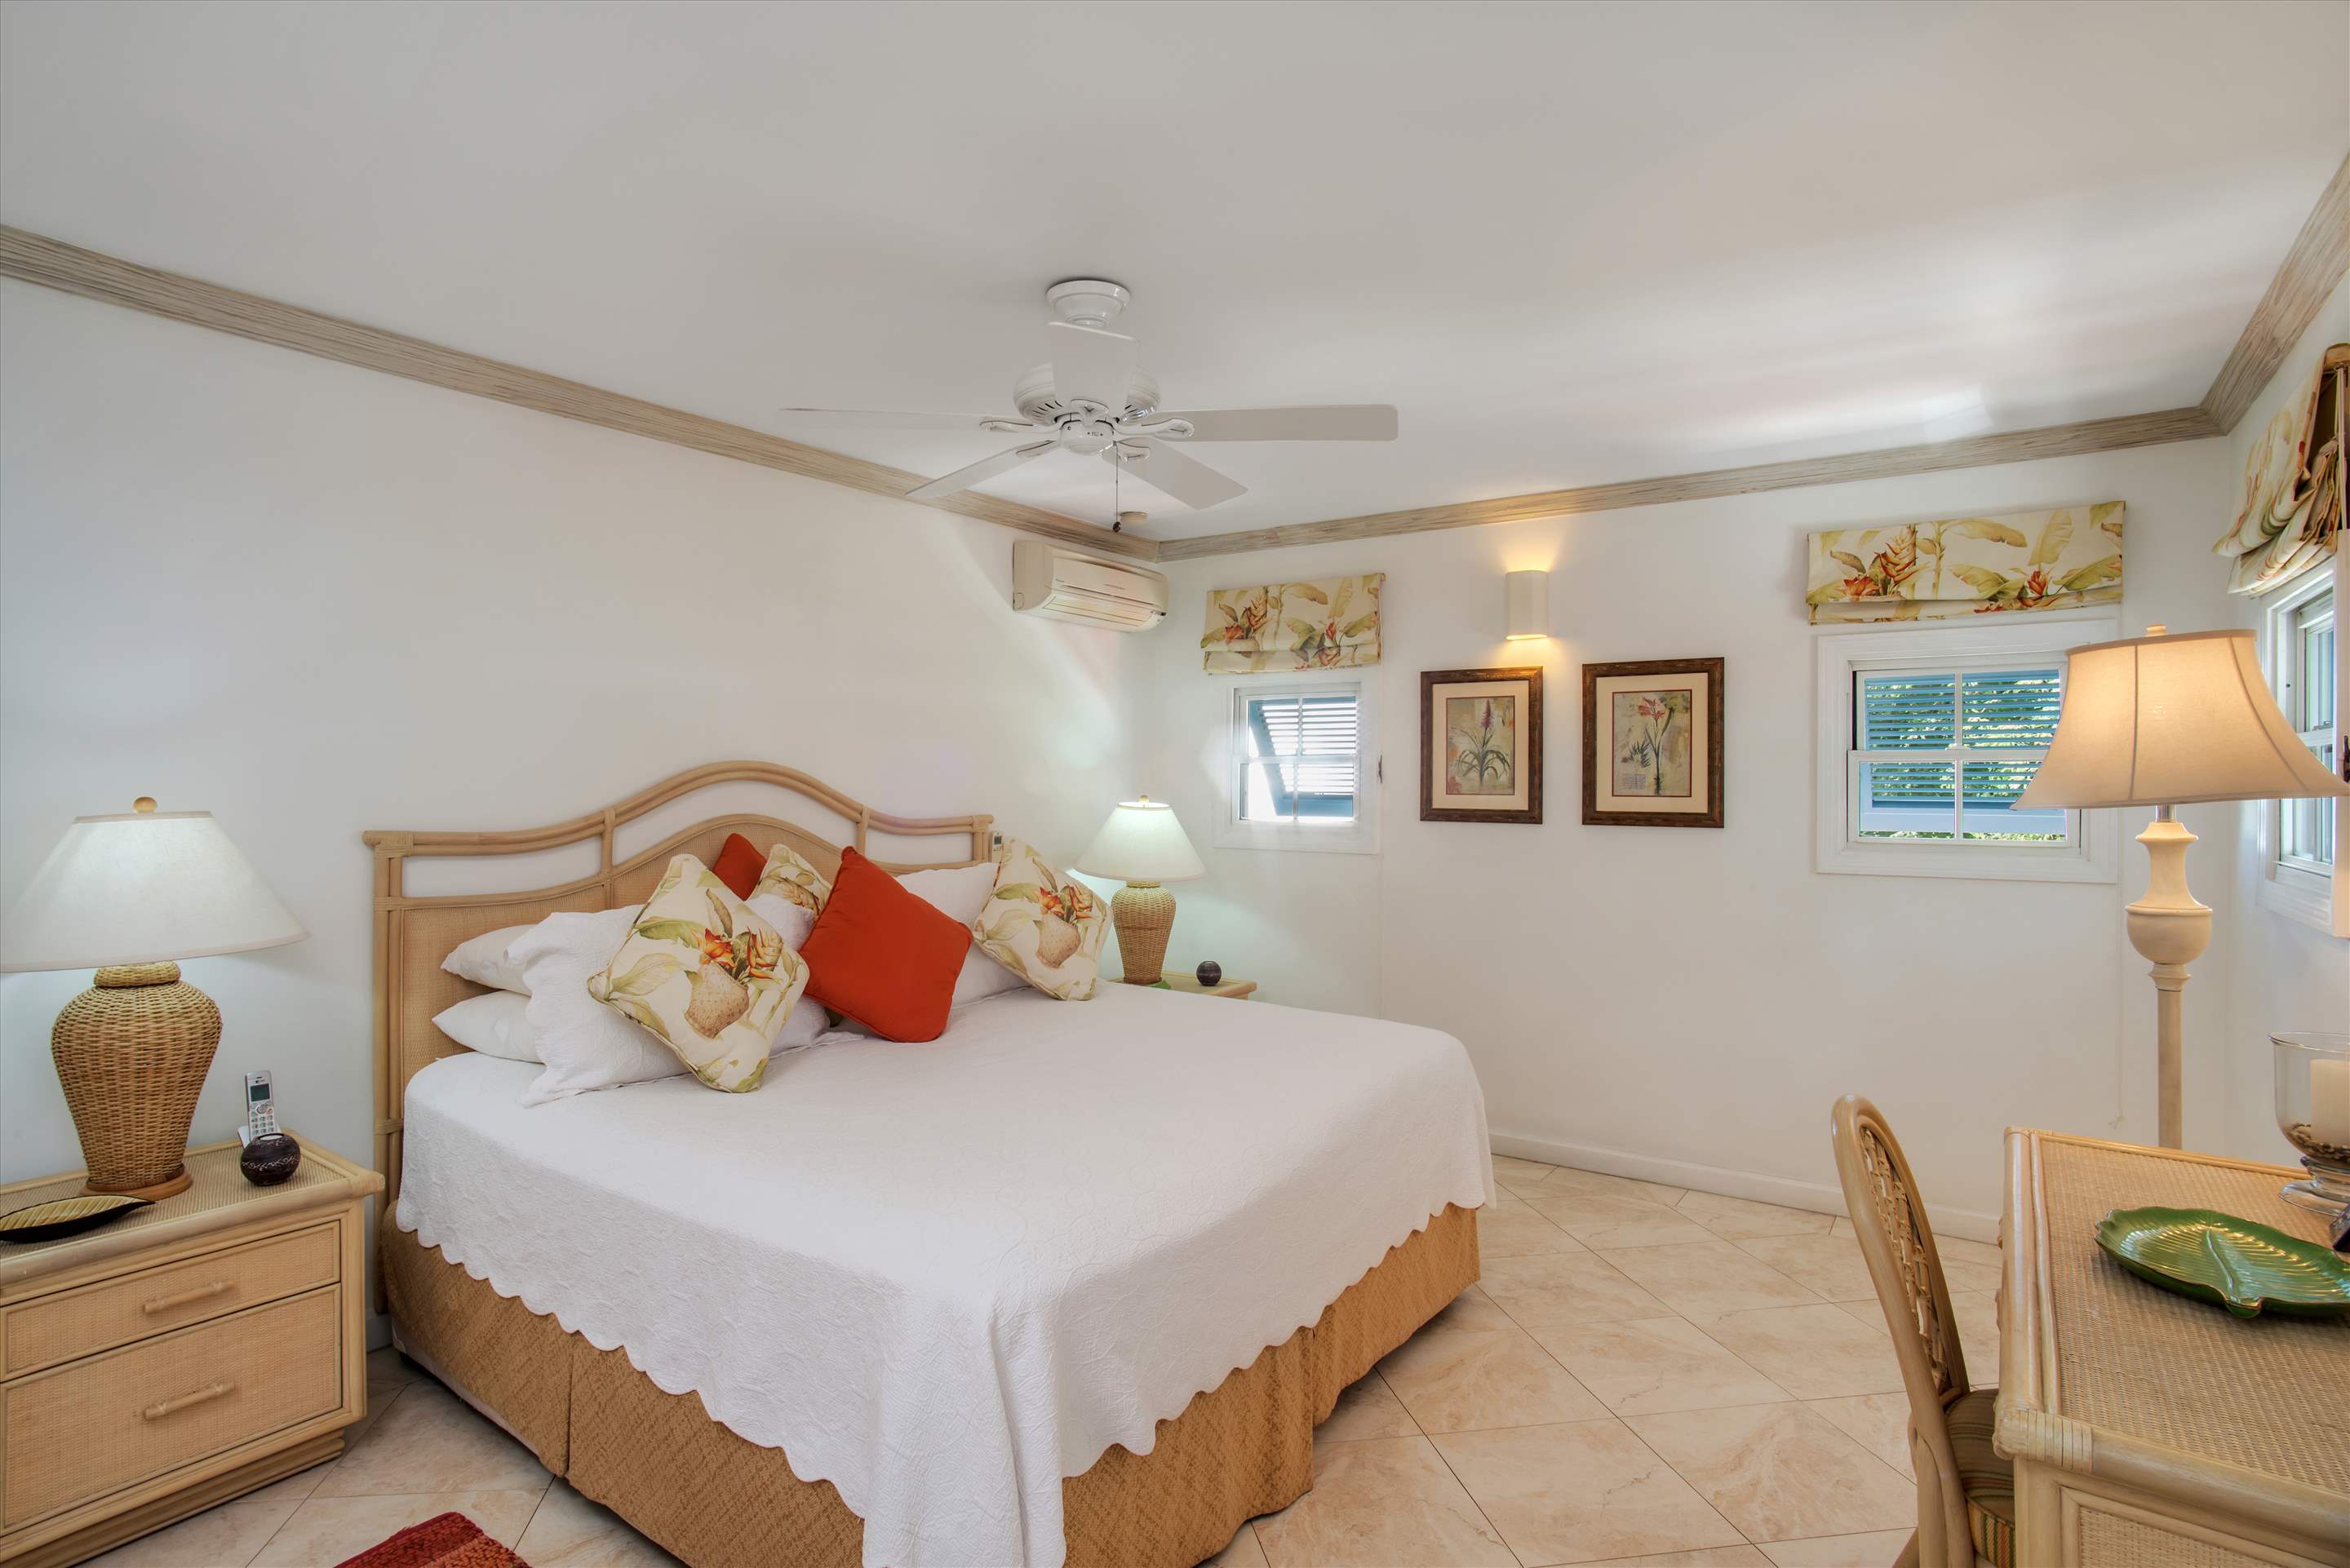 Villas on the Beach 205, 2 bedroom, 2 bedroom apartment in St. James & West Coast, Barbados Photo #11